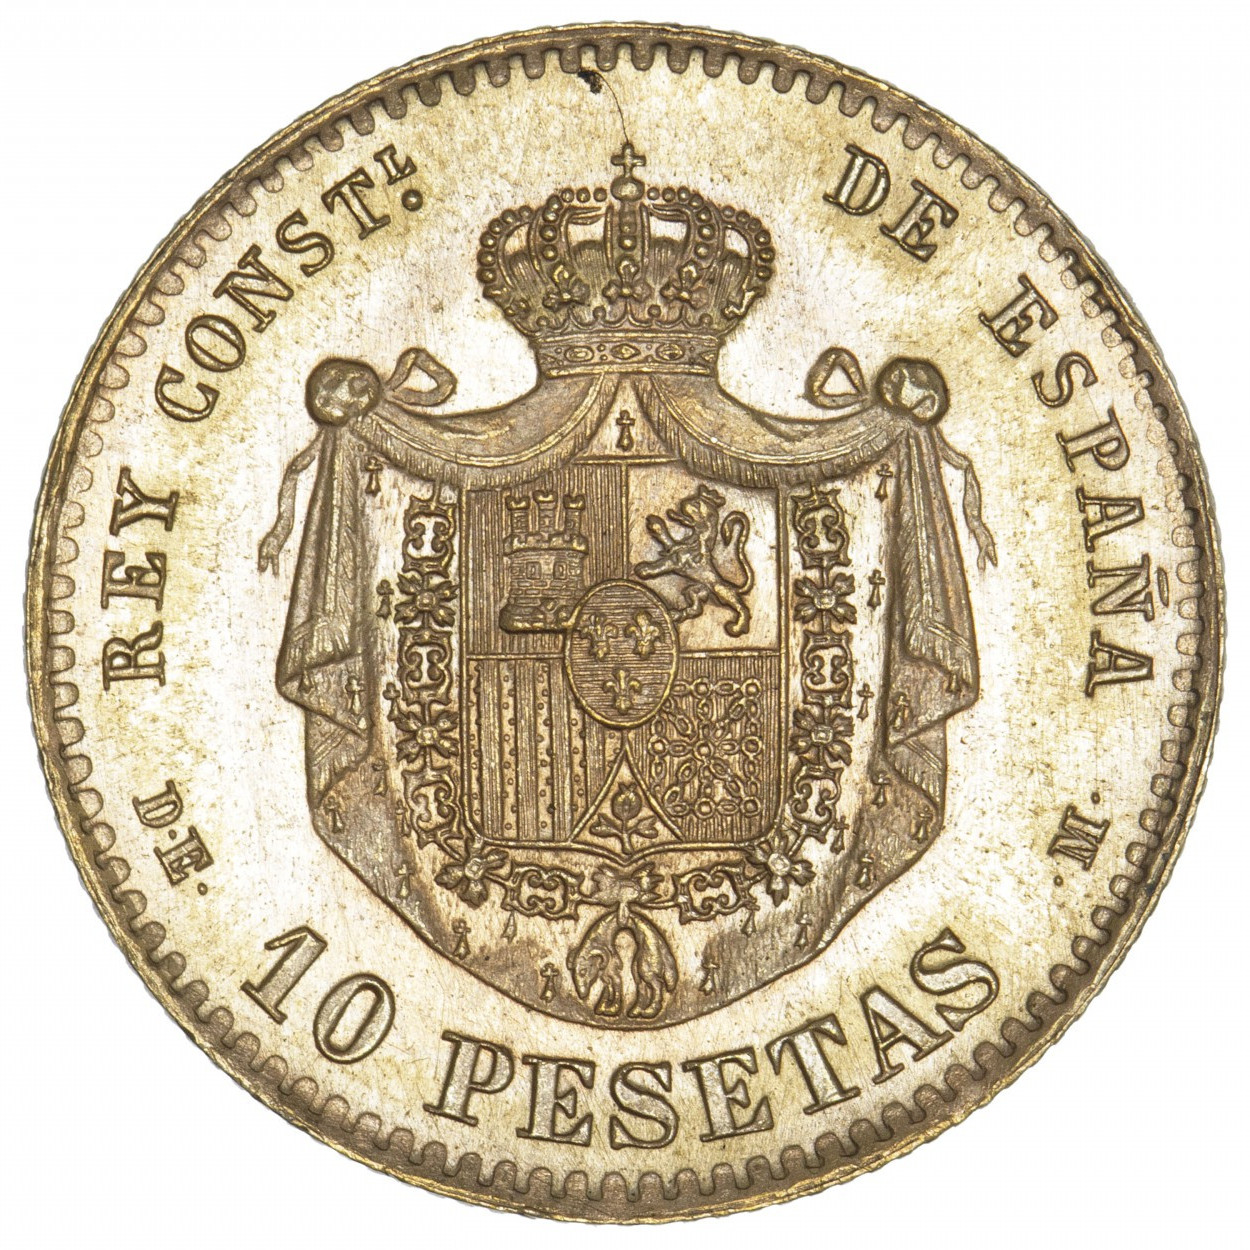 Espagne - 10 Pesetas - 1878 M revers